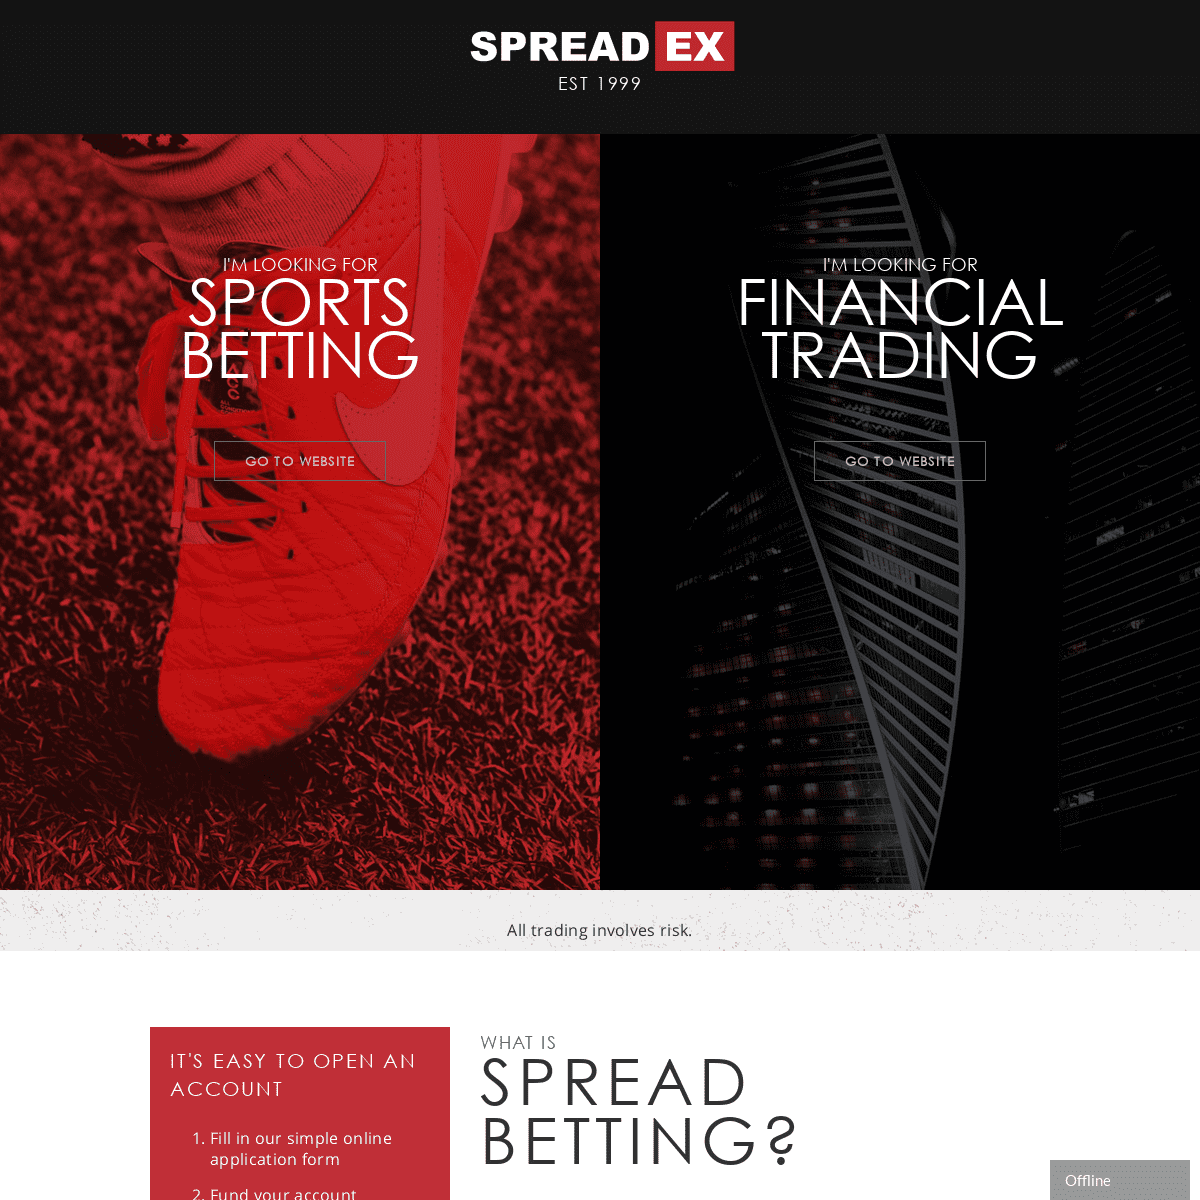 Financial & Sports Spread Betting | Spreadex